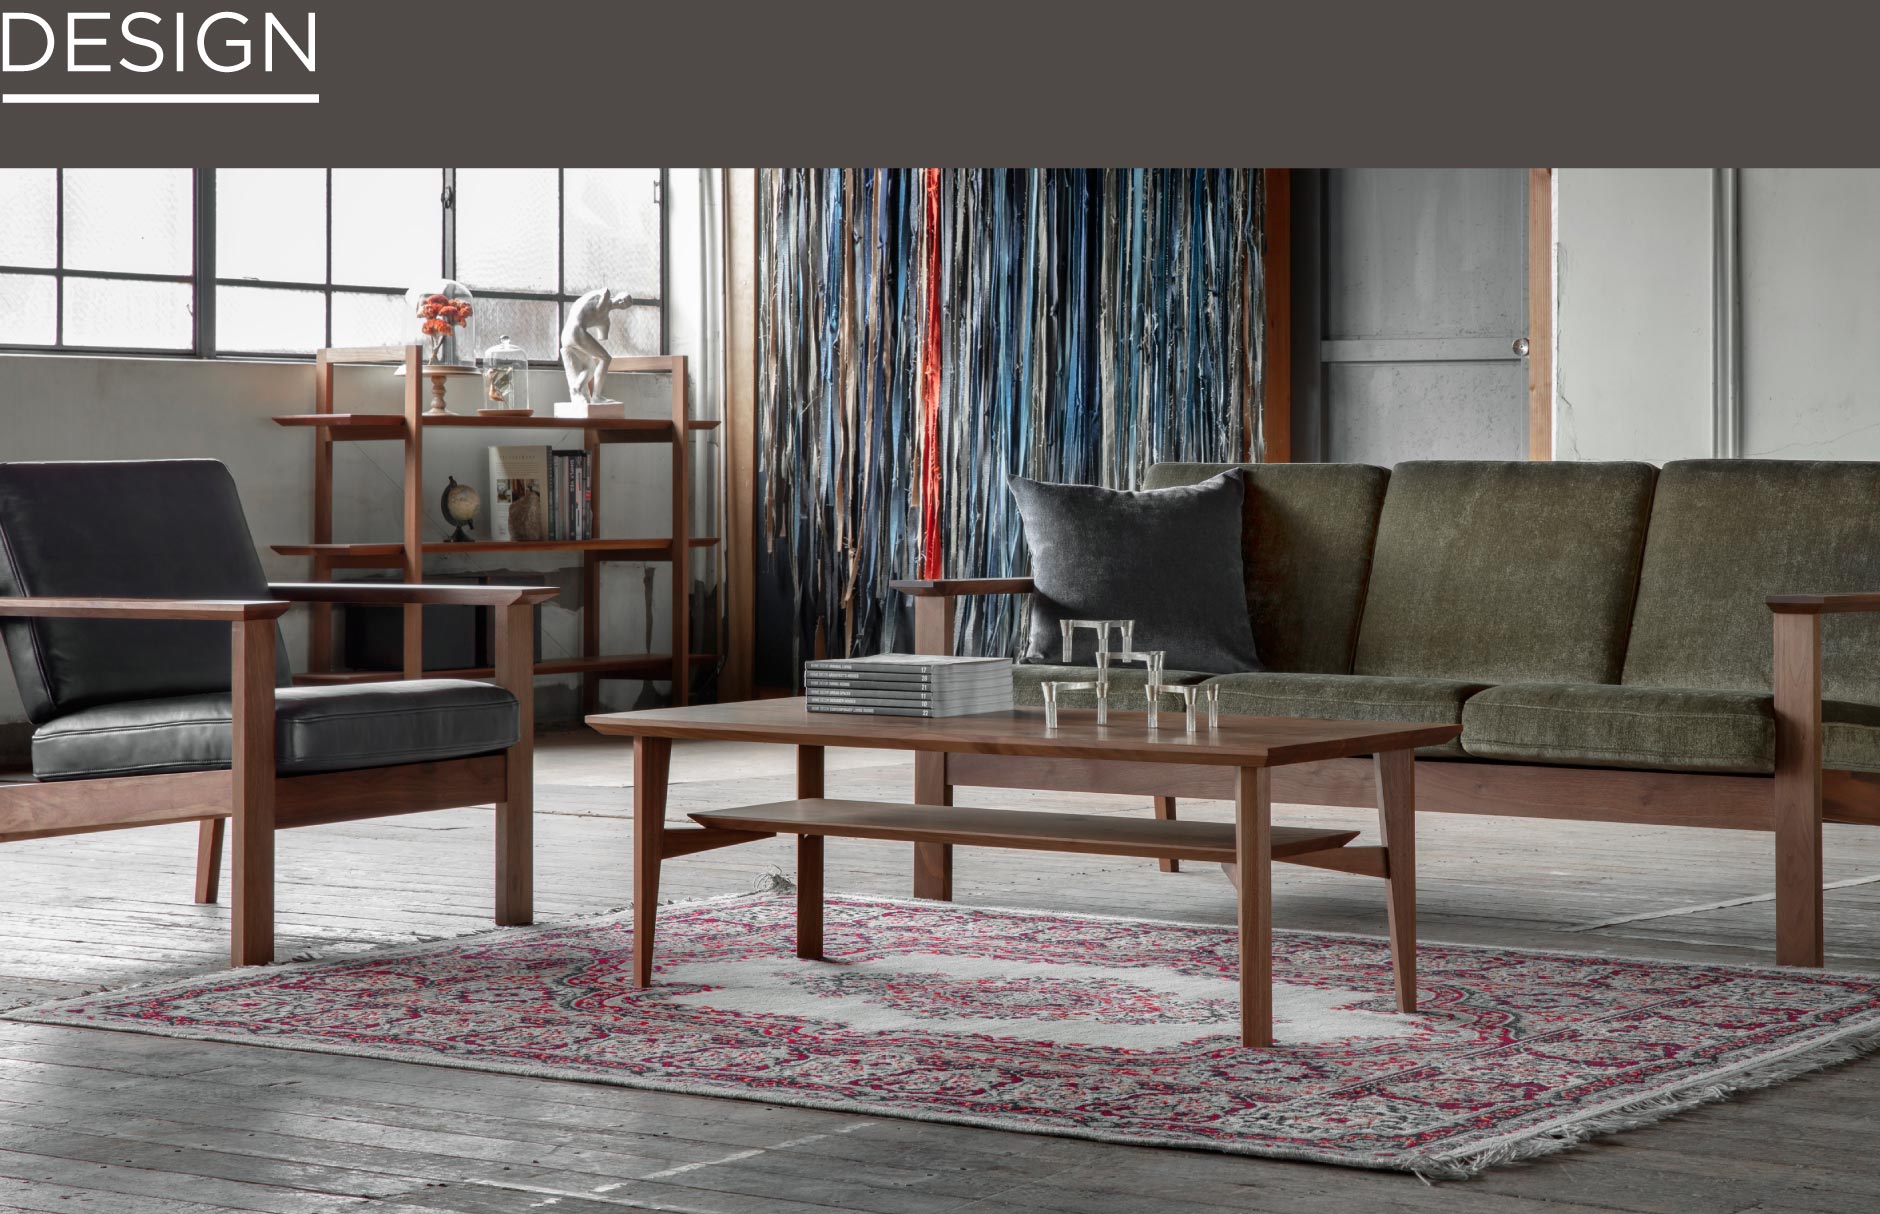 SOLIDの家具の中でも収納に適した長方形のリビングテーブル。テーブル面はテーパーがかかっているシンプルなデザイン性で、空間に馴染みます。